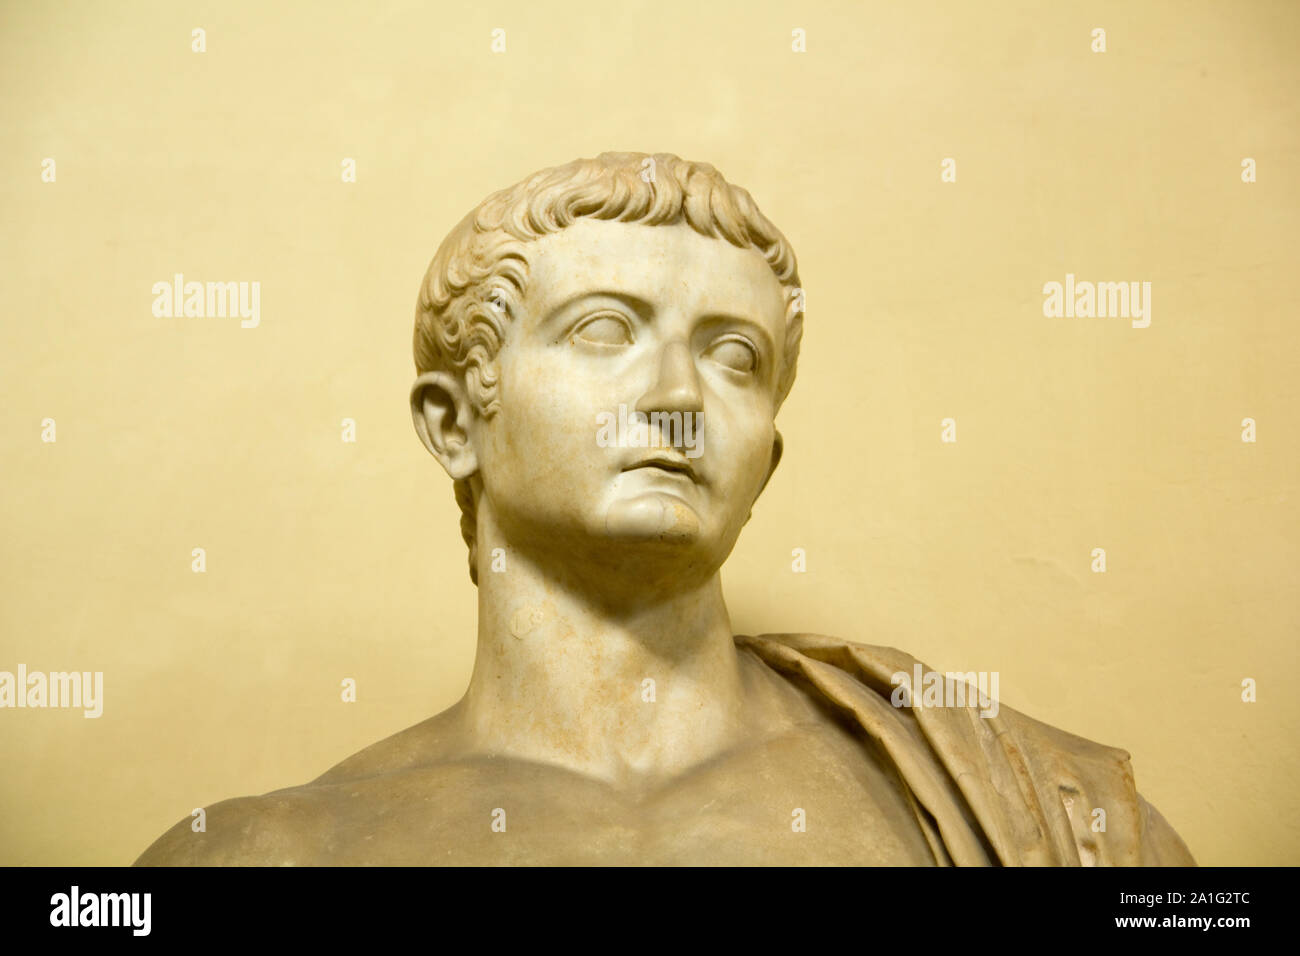 Statue des Kaisers Tiberius, Rom. II Jahrhundert N.CHR. Römischer Kaiser von 14 AD 37 AD VATIKANSTADT - 18. März: Statue des Kaisers Tiberius auf Vatikan Museum, Vatikan cit Stockfoto